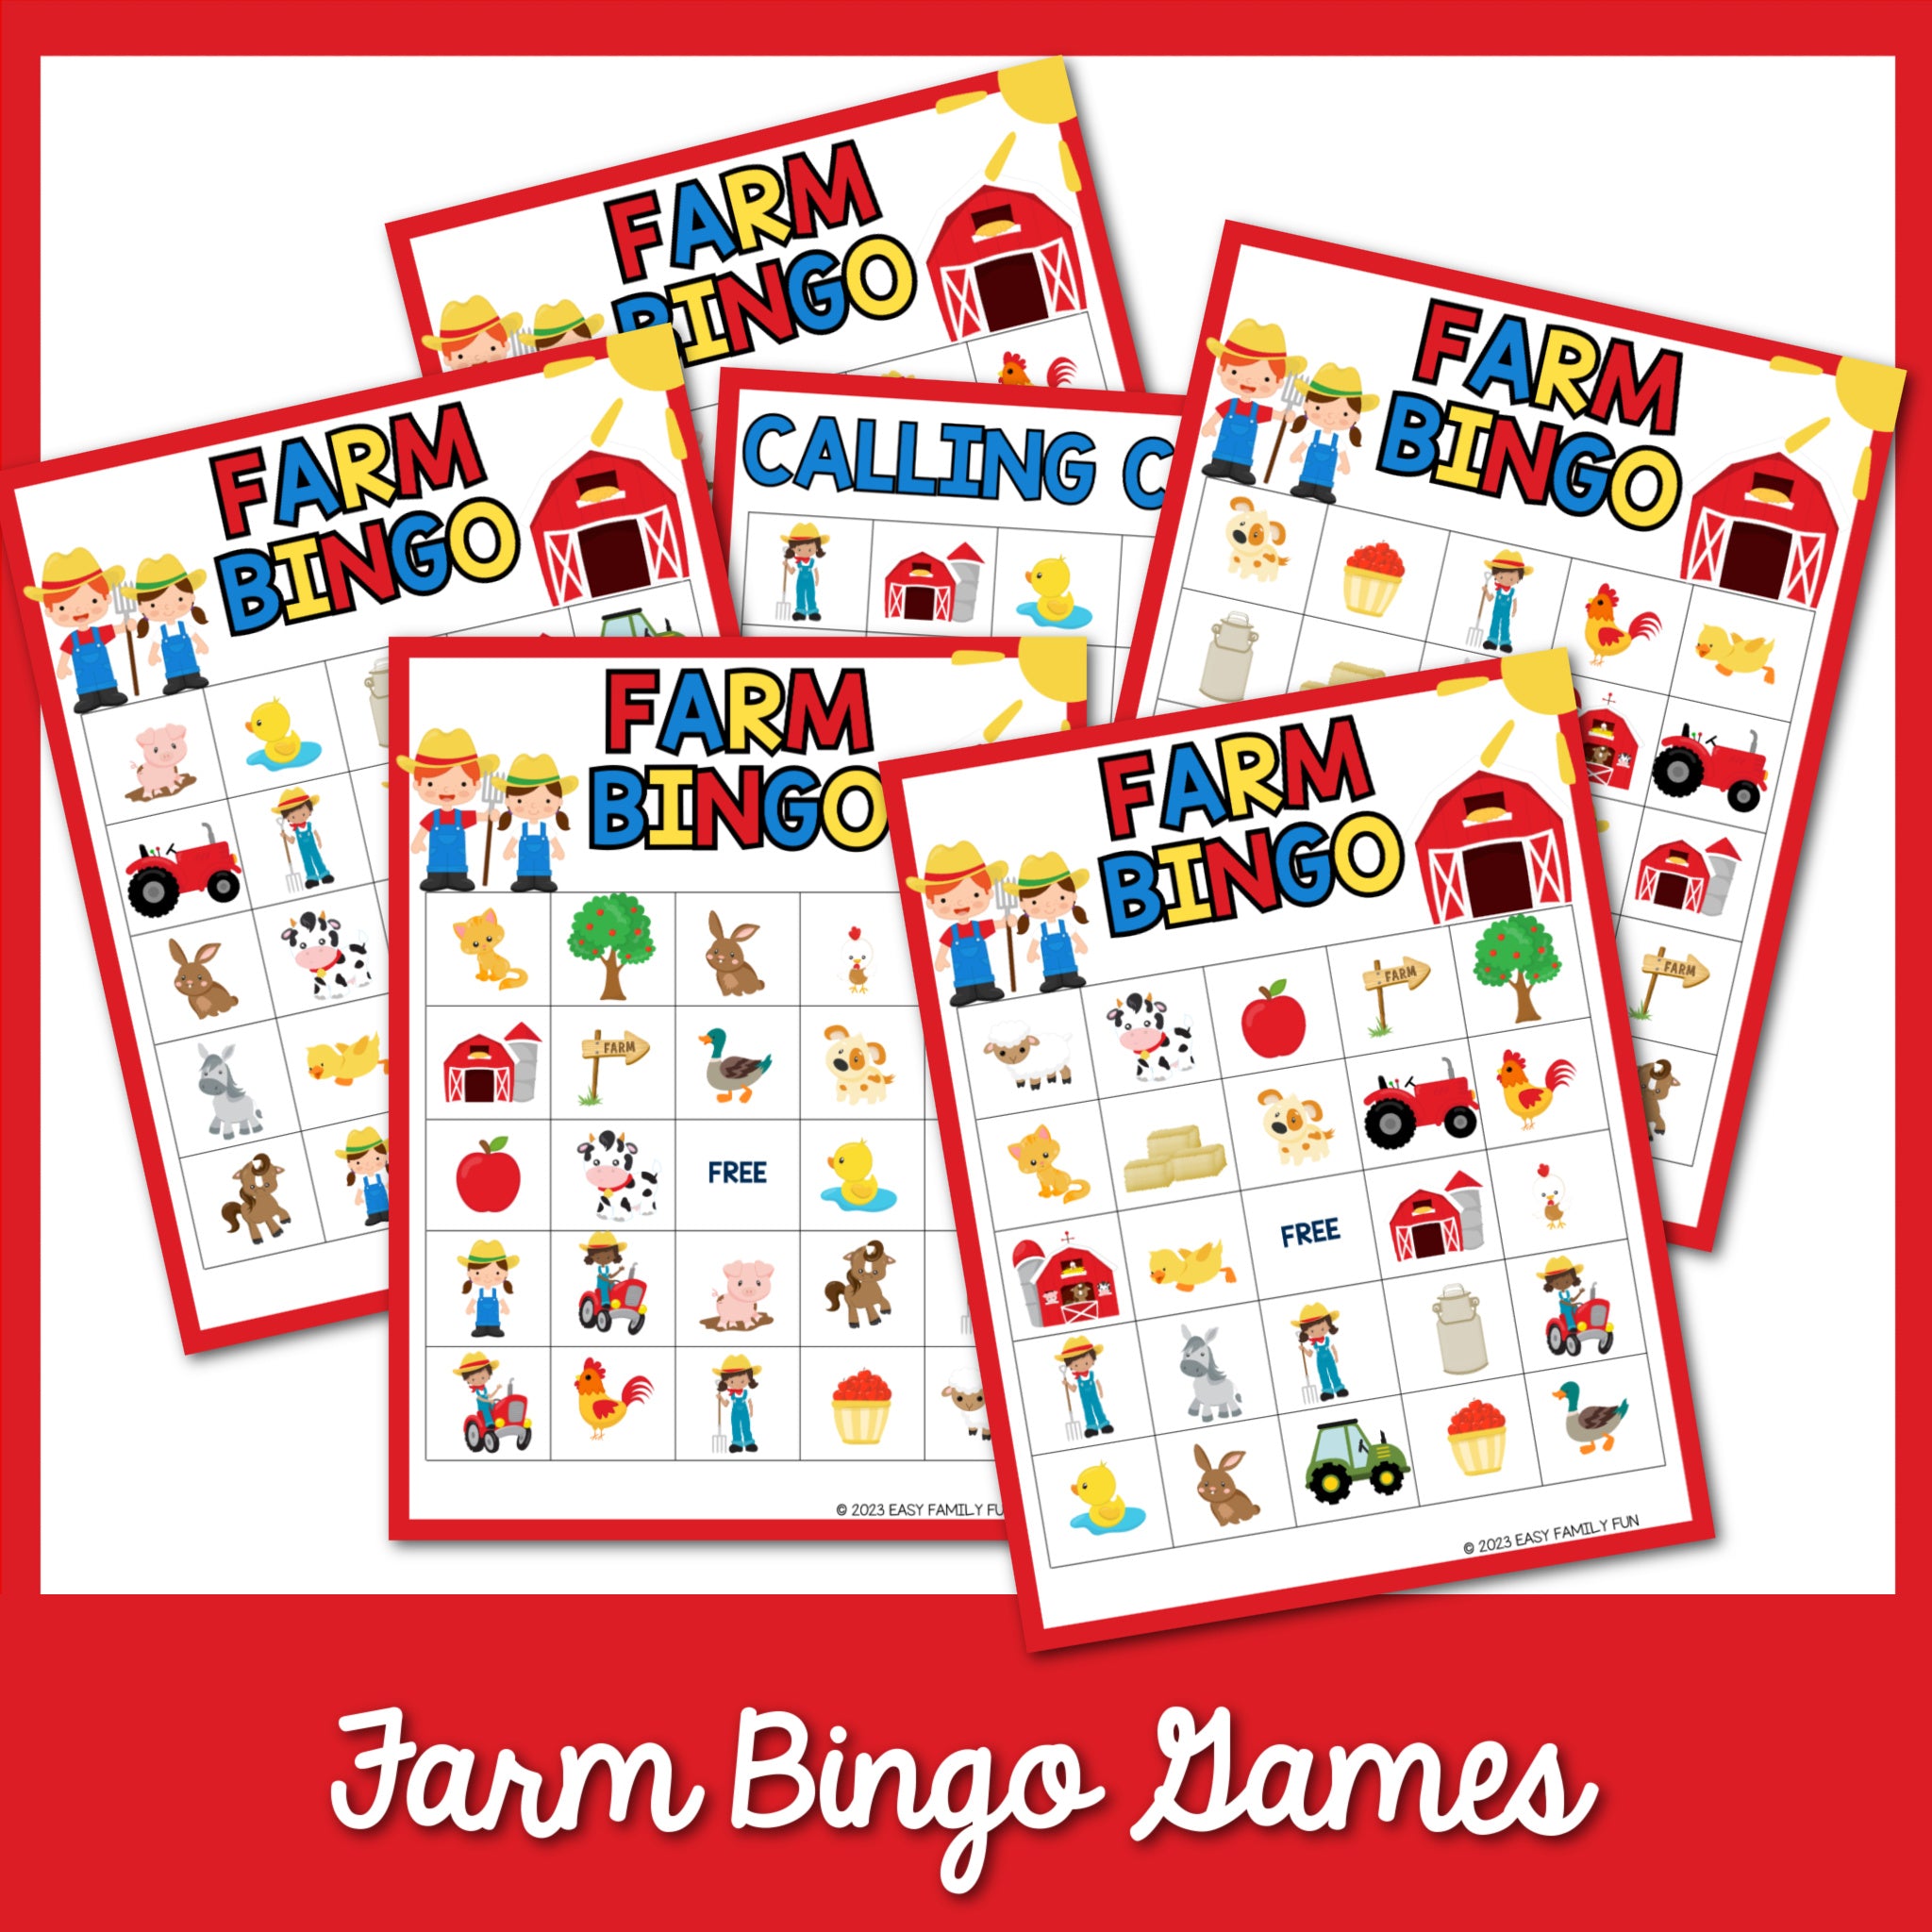 Farm Bingo Game Set With Red Border